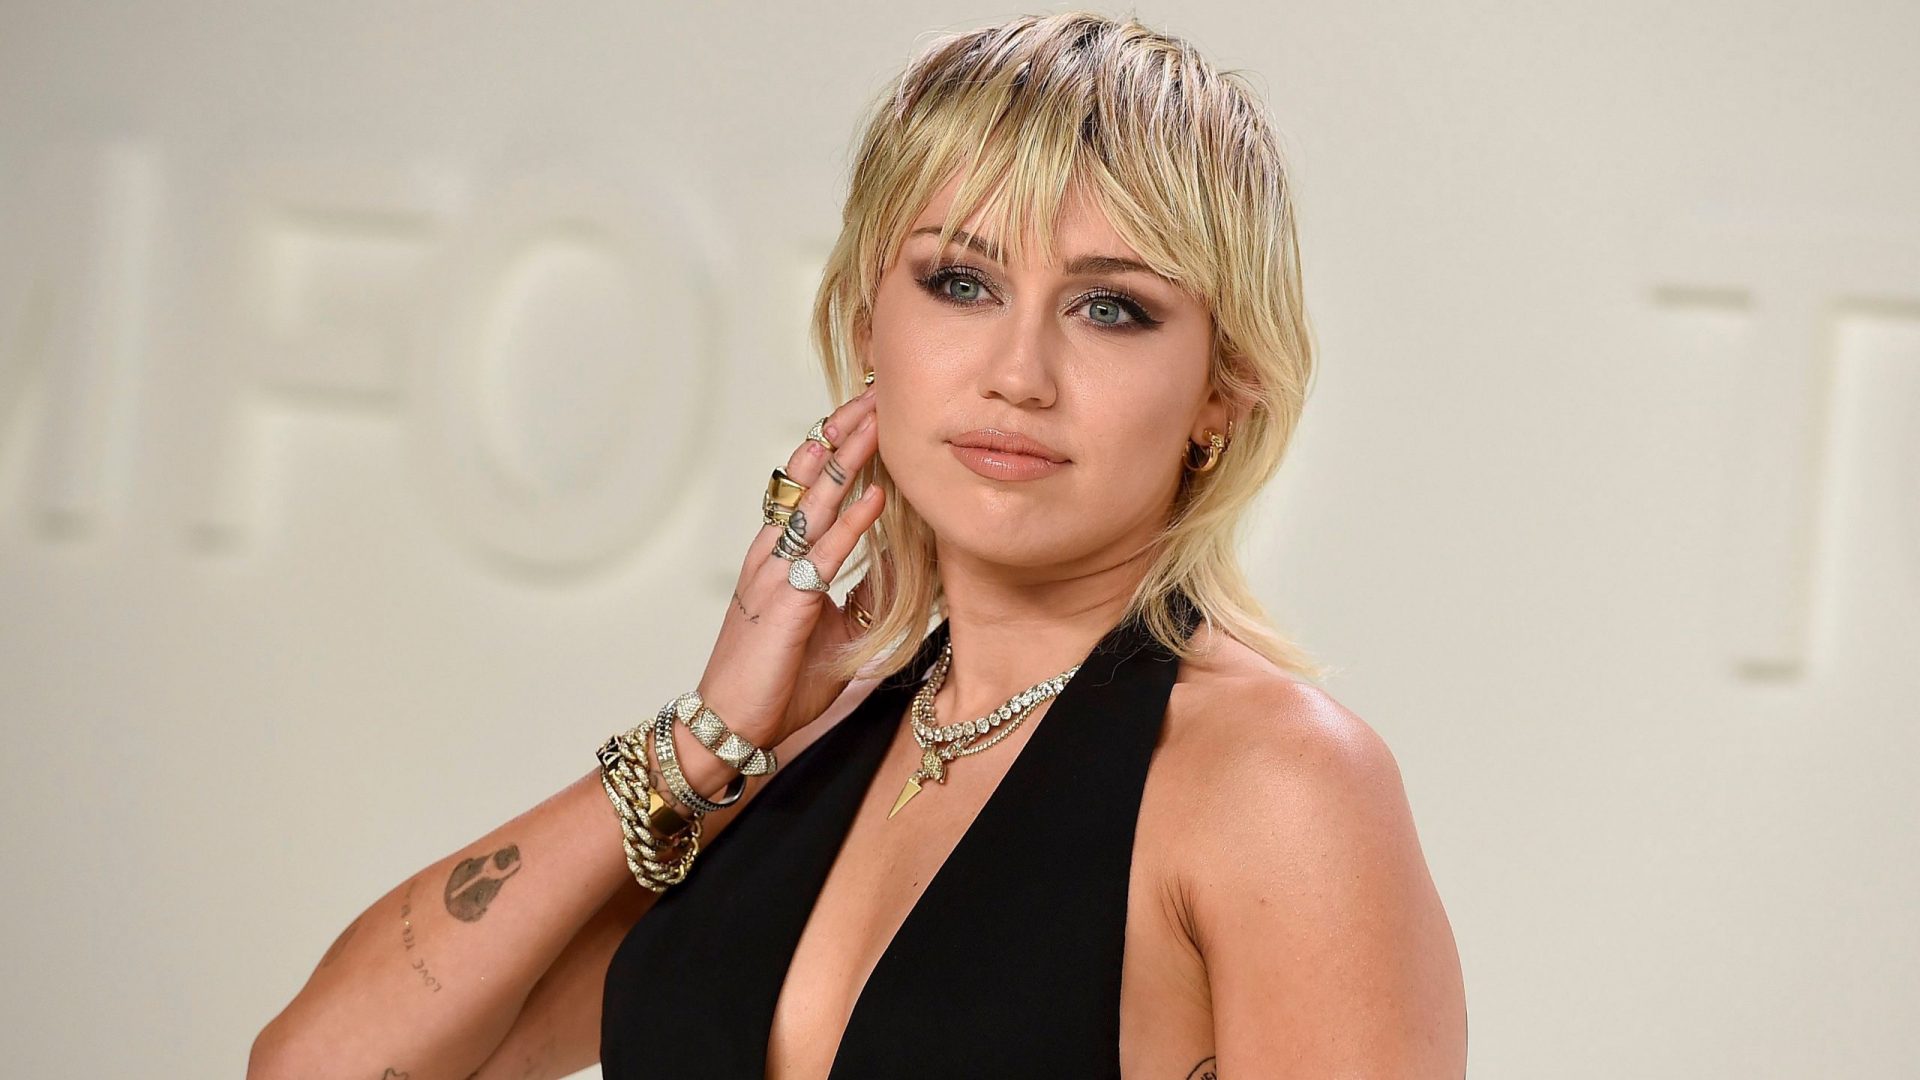 Has Miley Cyrus Undergone Nose Job Surgery?